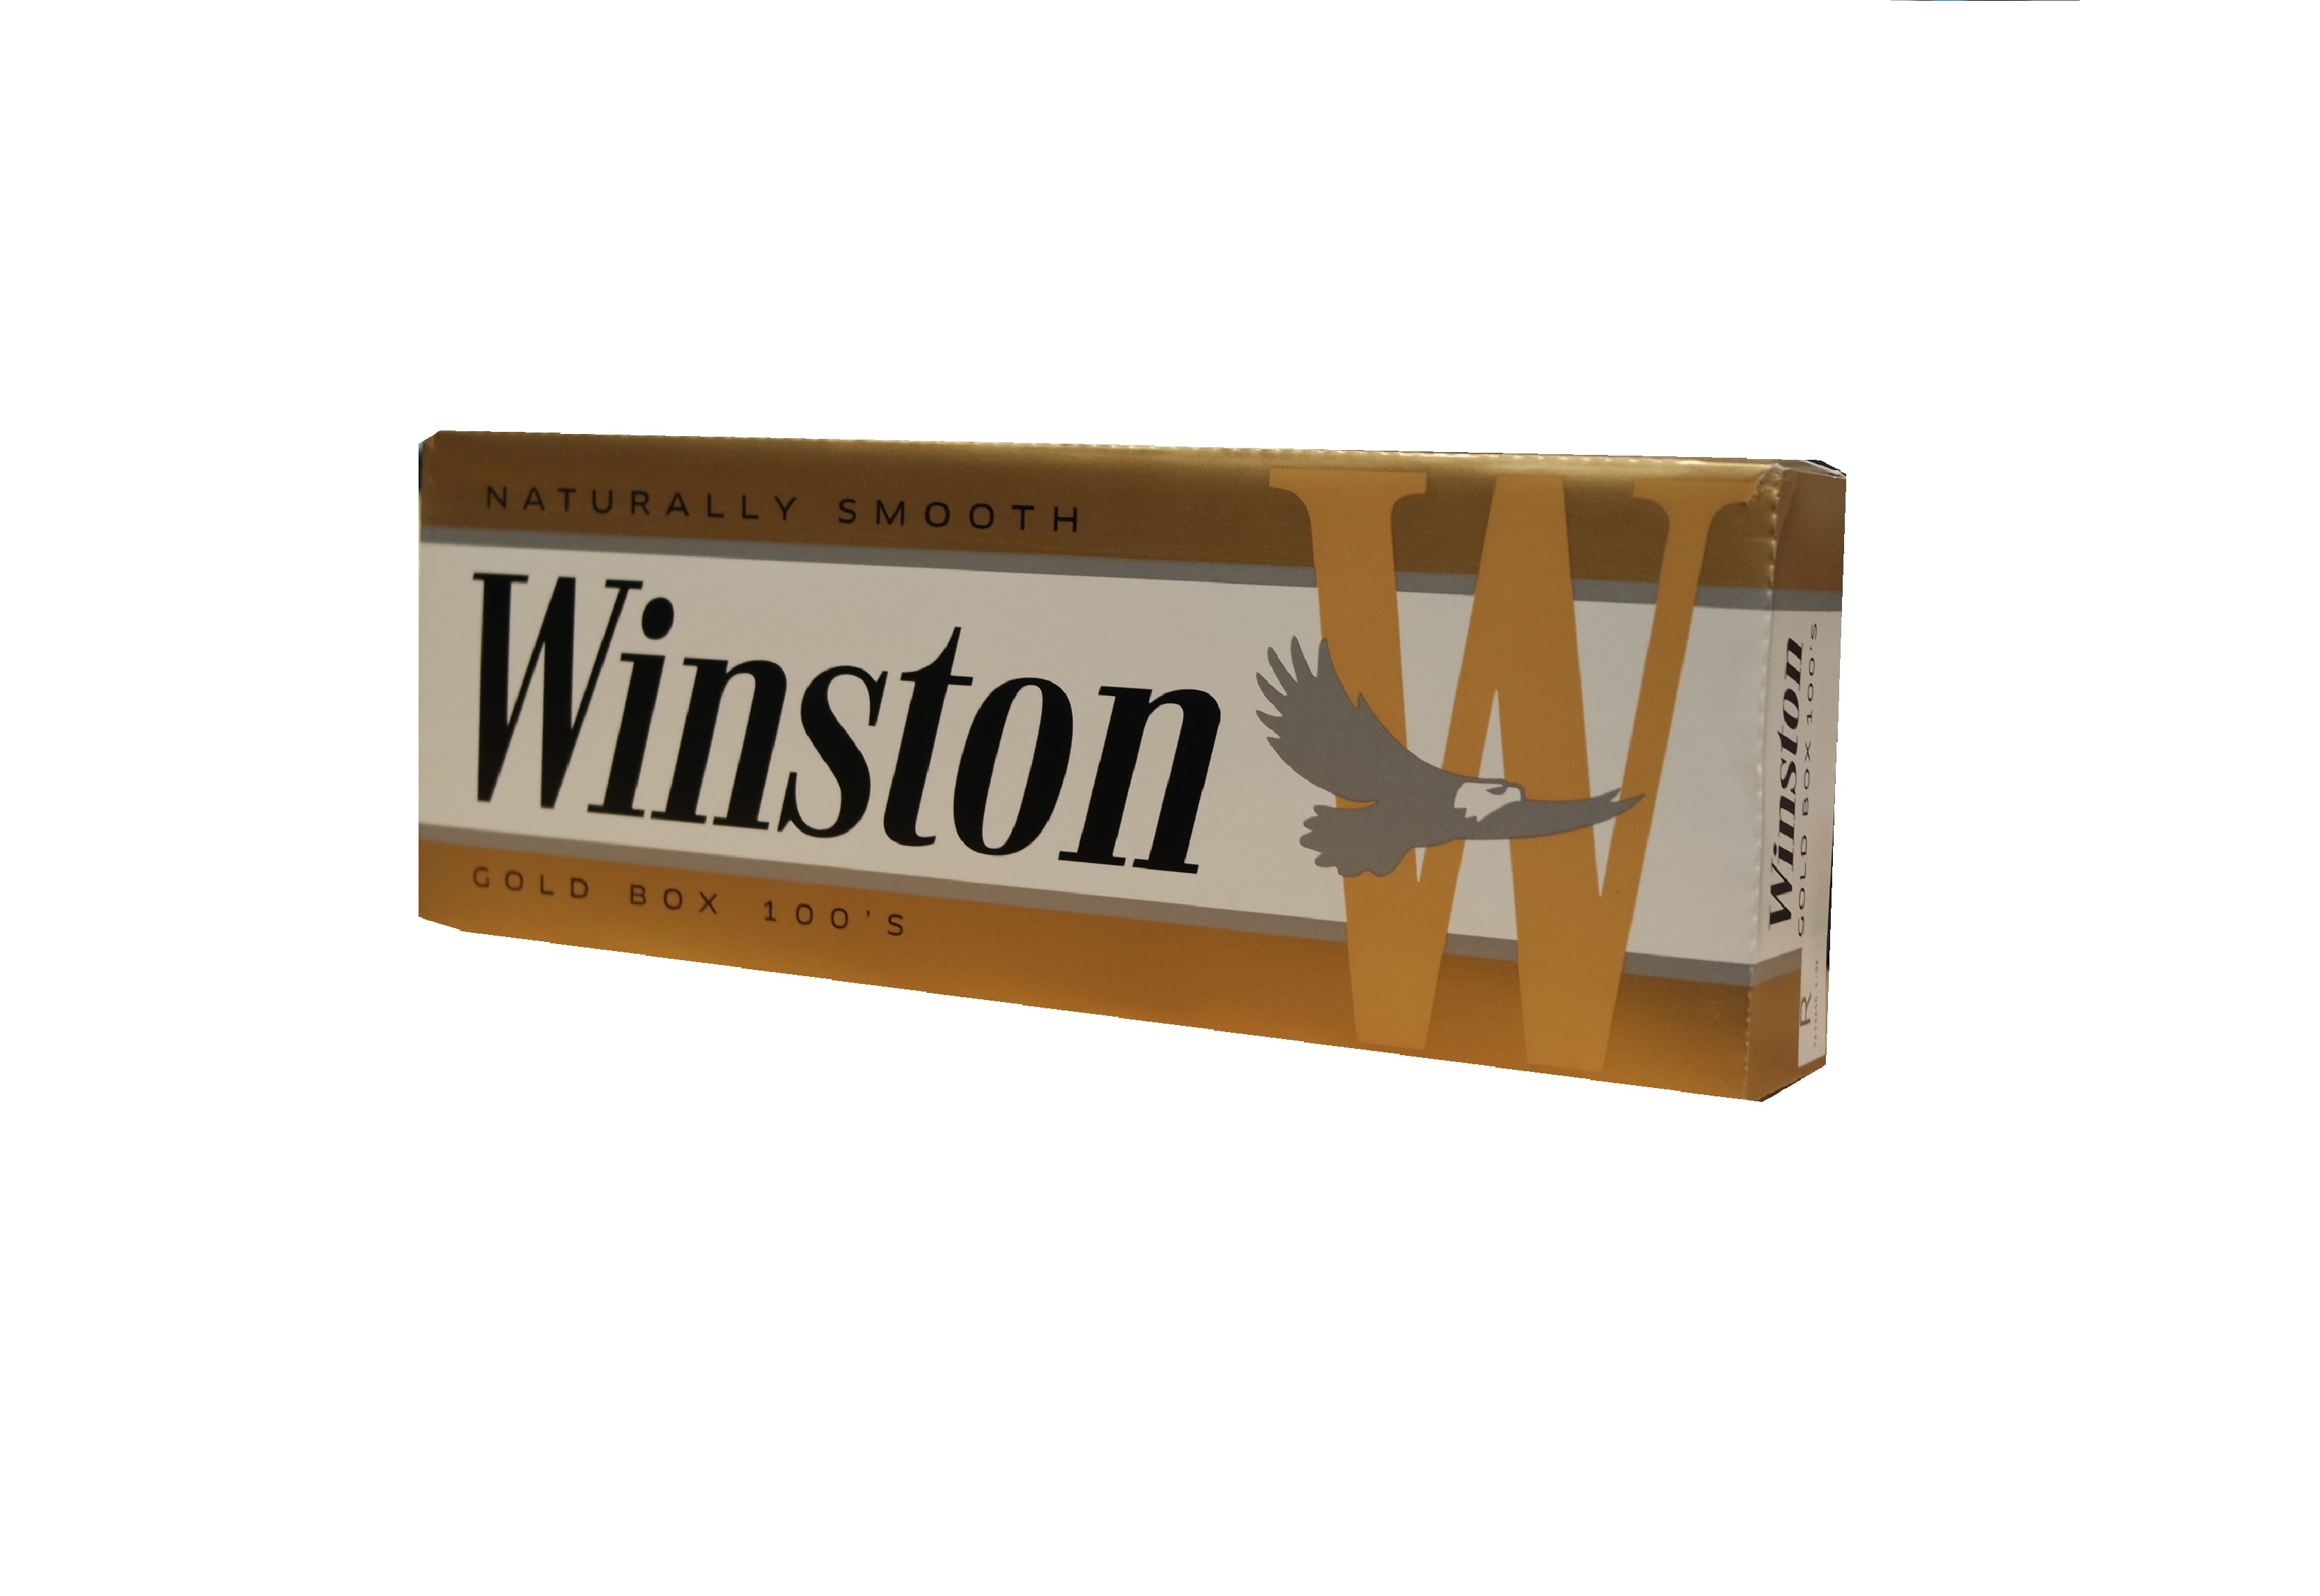 Winston gold 100 box